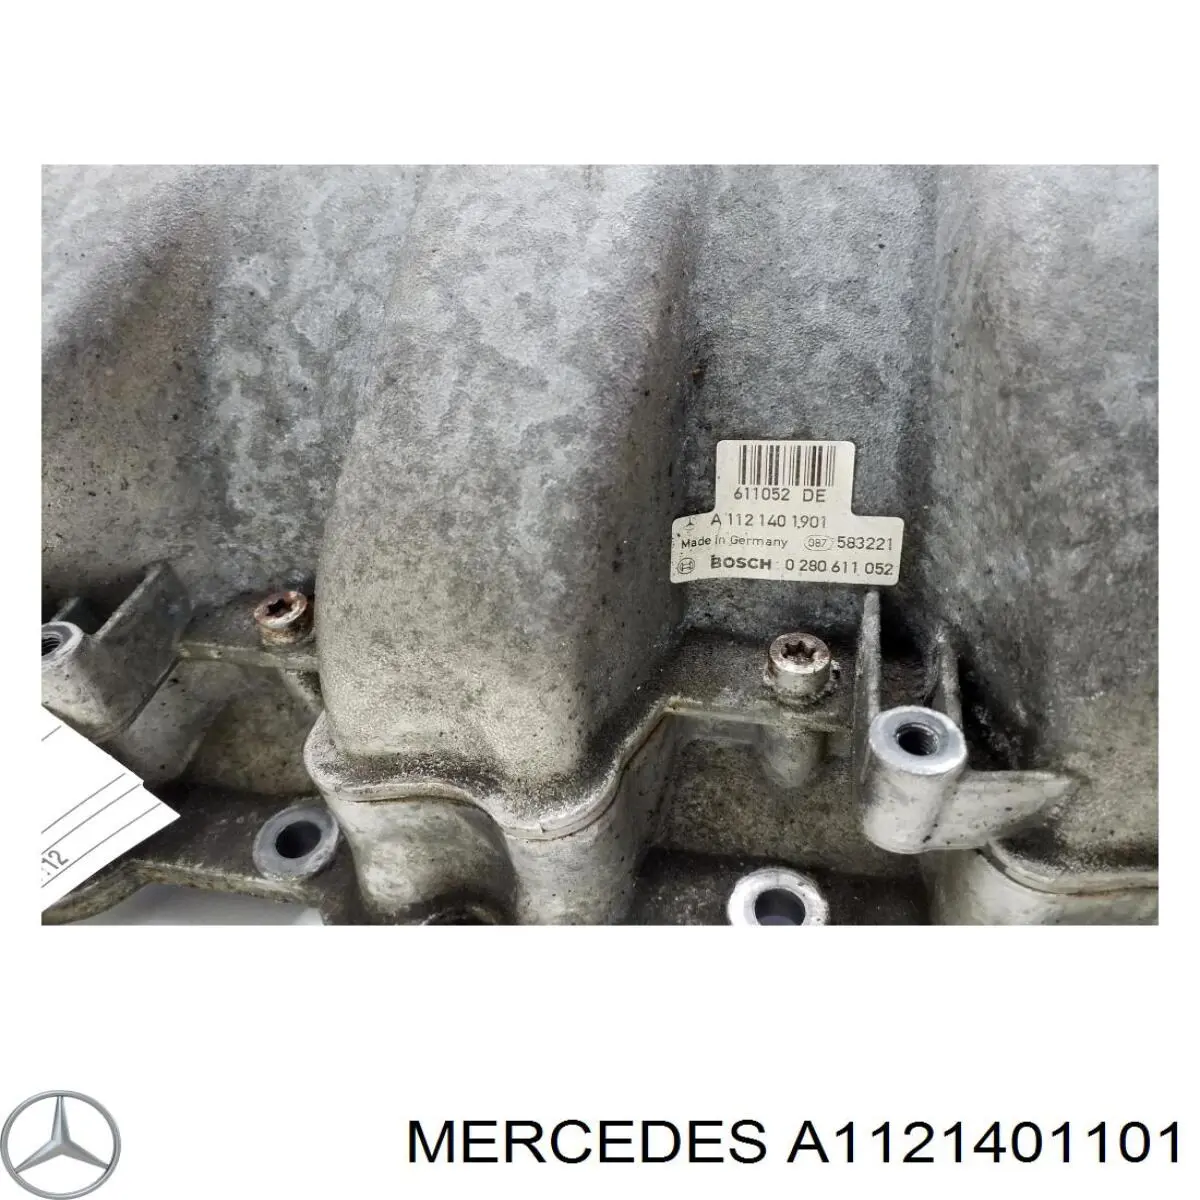 A1121402101 Mercedes colector de admisión